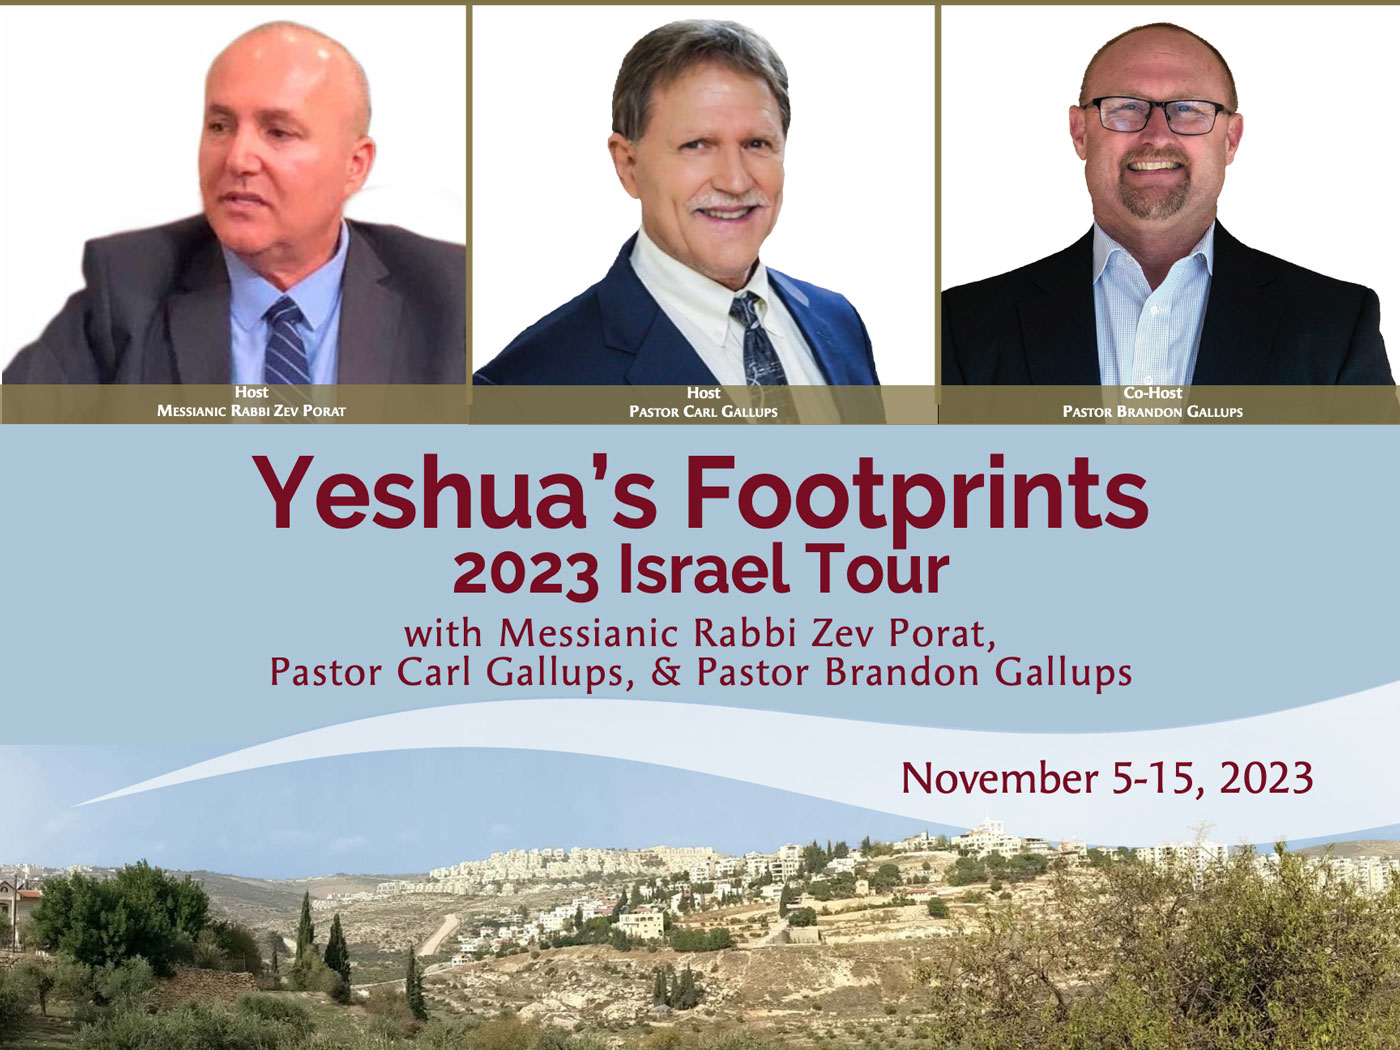 Yeshua's Footprint 2023 Israel Tour